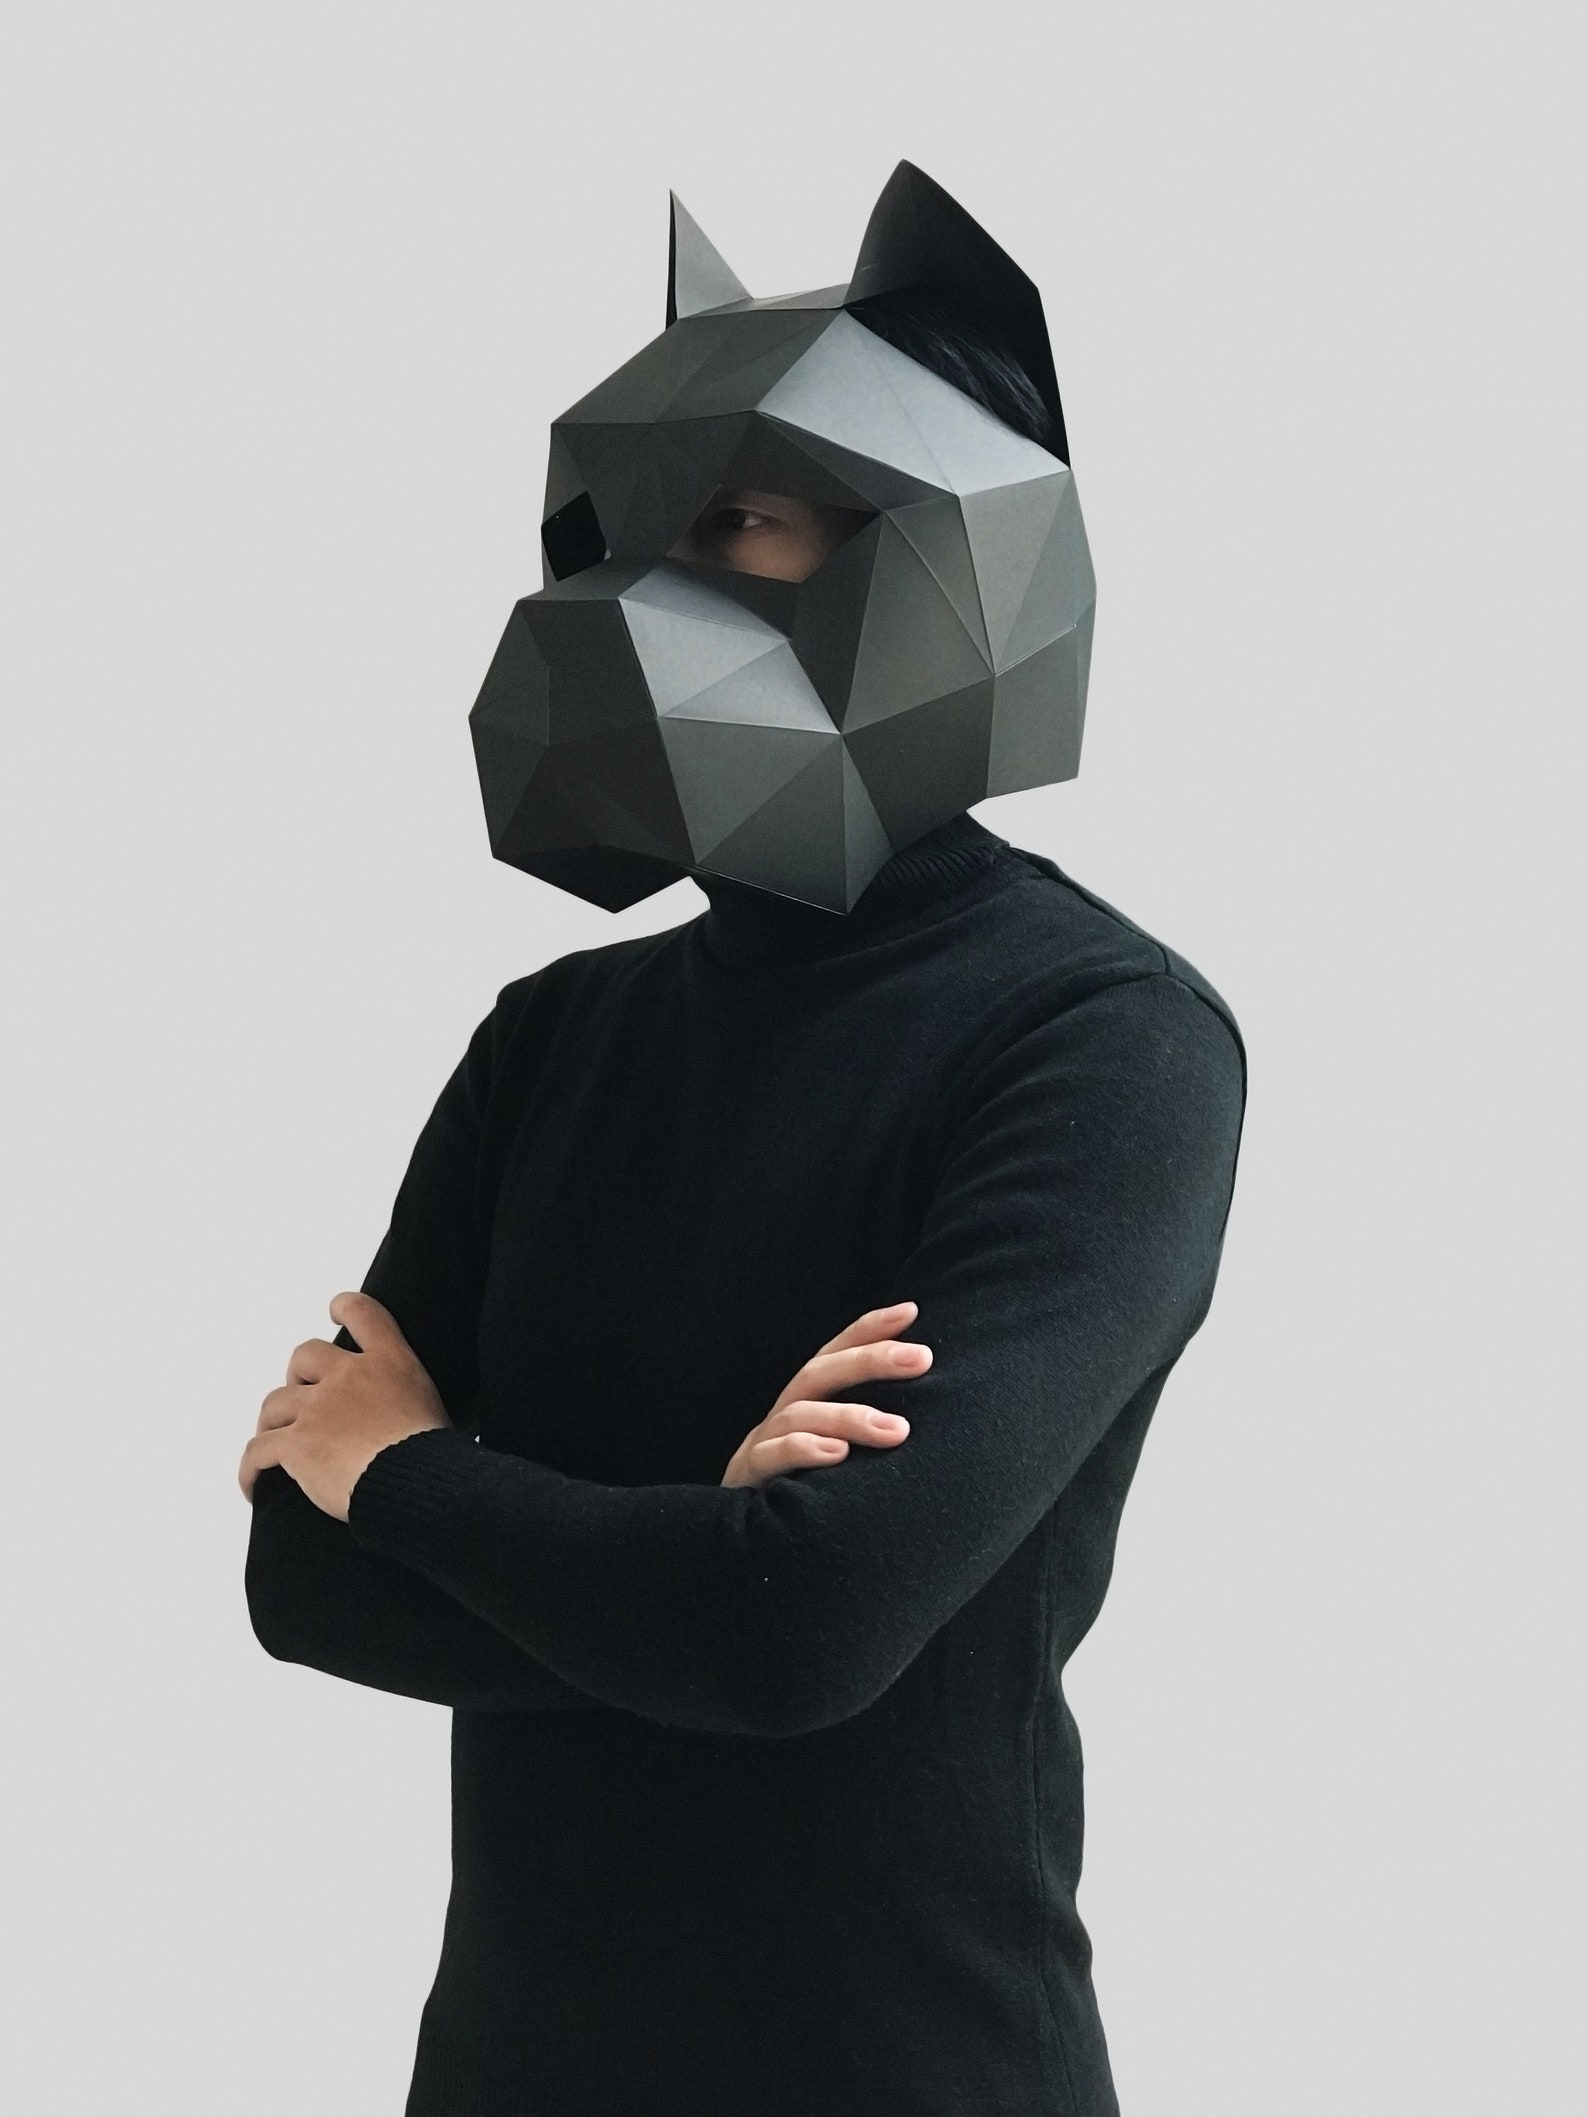 Cane Corso Dog Mask Template Paper Mask Papercraft Mask | Etsy